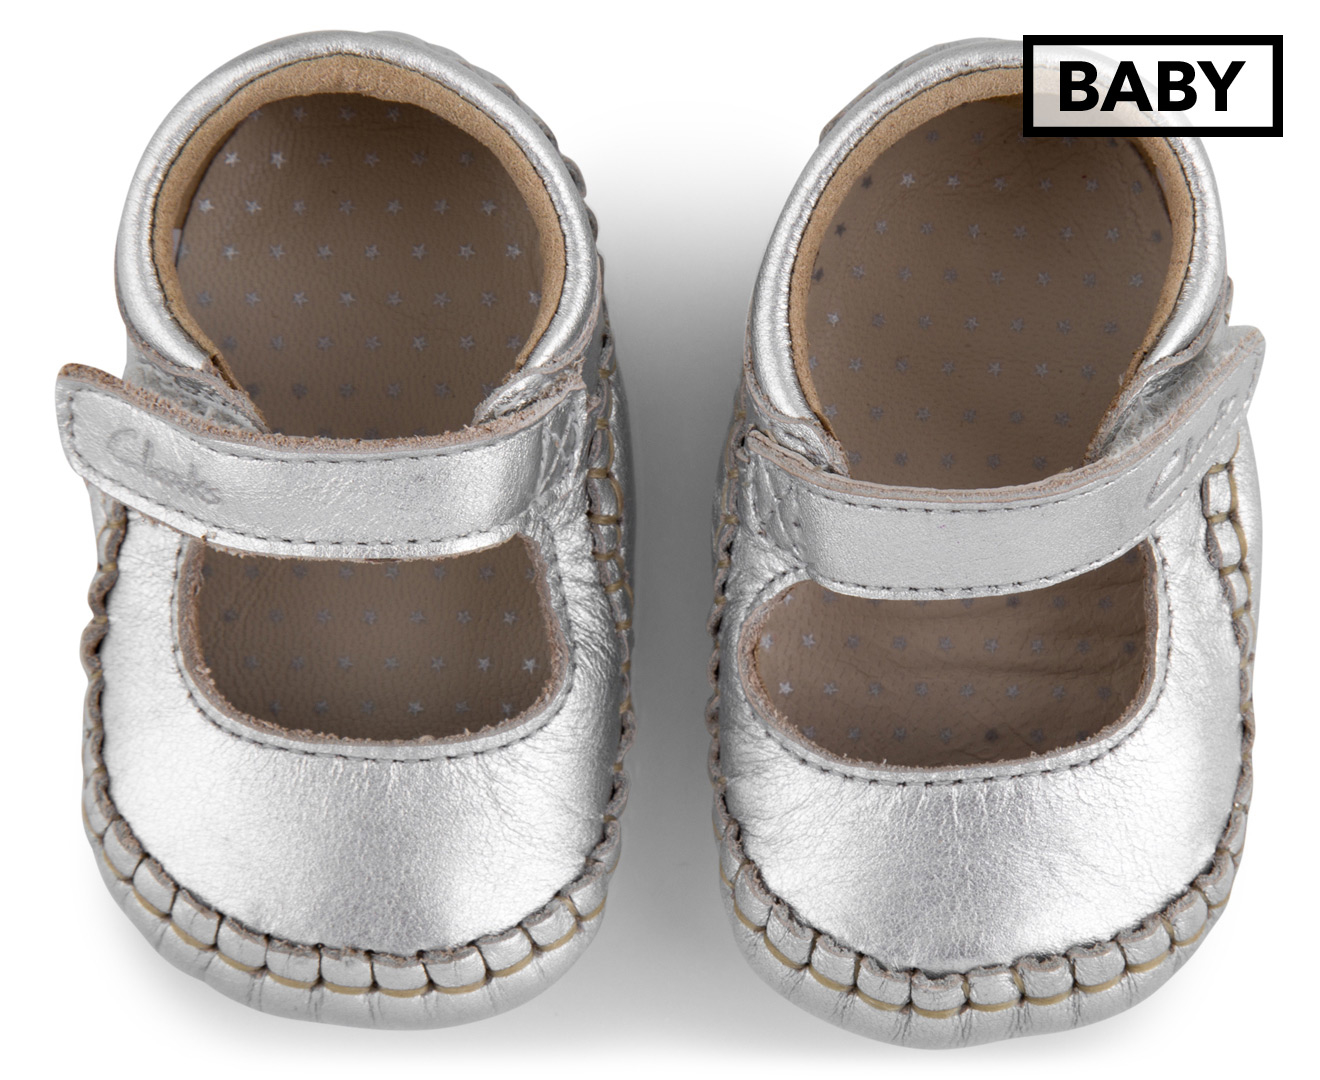 Clarks Baby Lucy Shoe - Metallic Leather